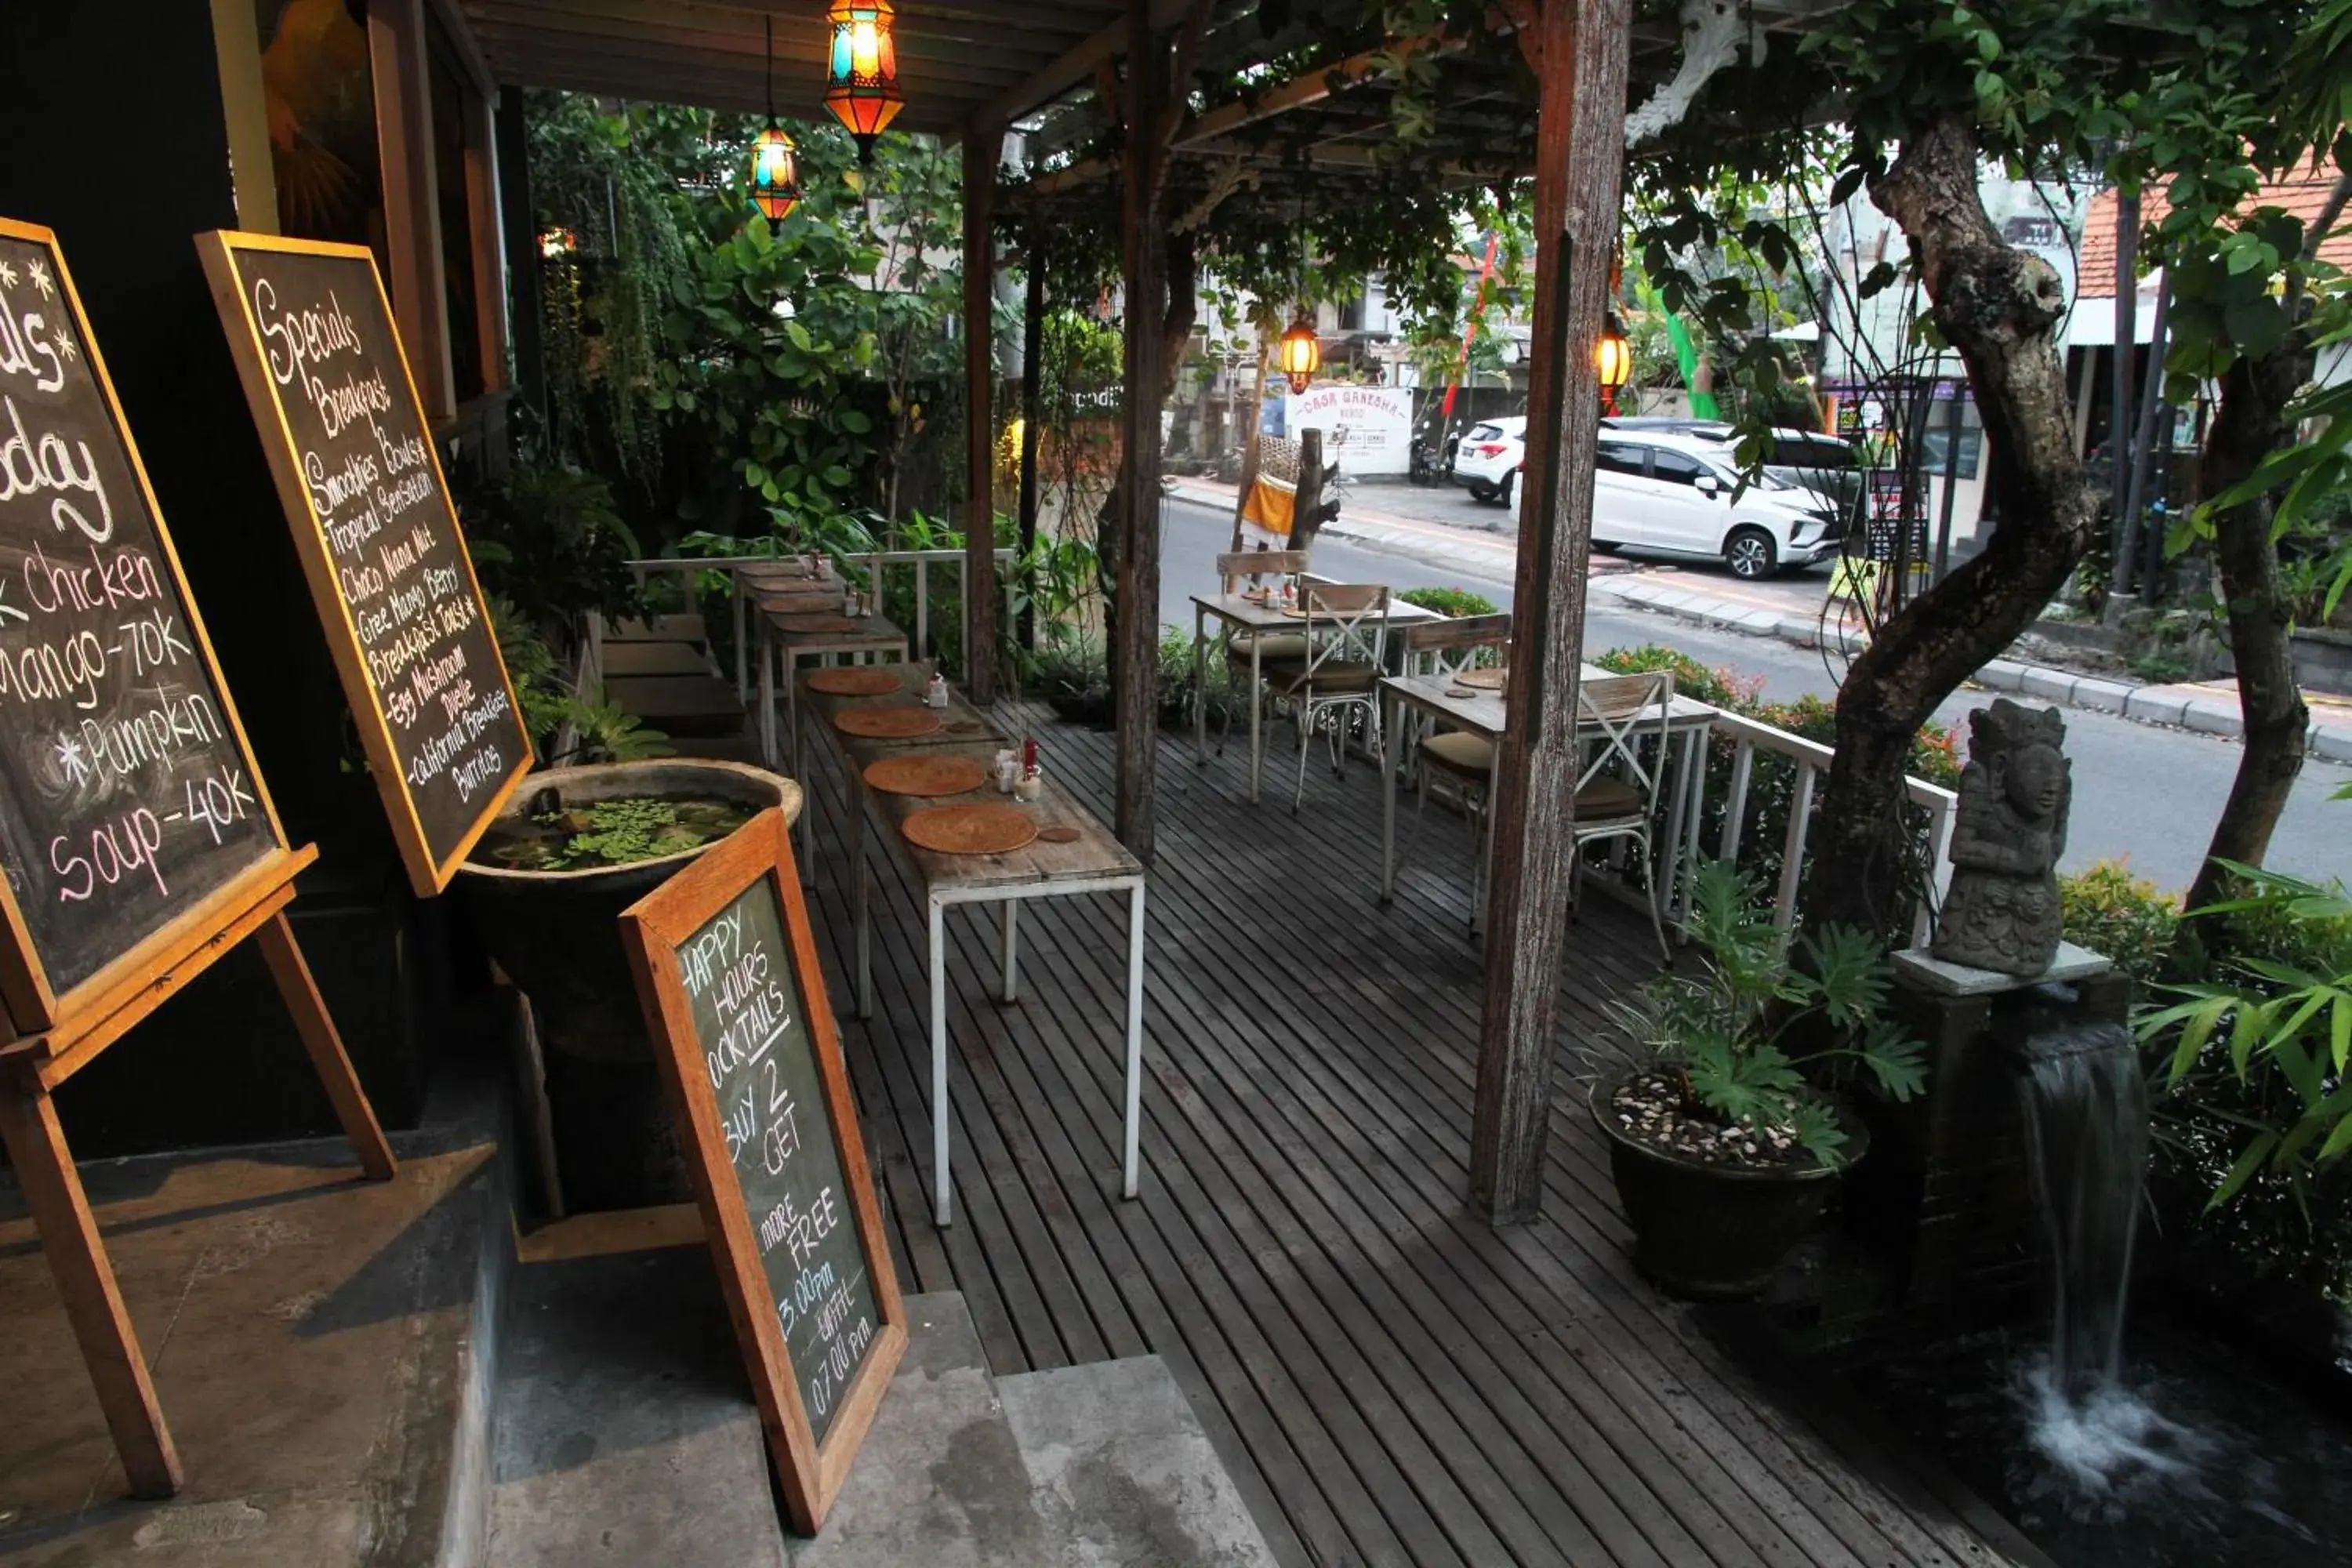 Restaurant/places to eat in Sapodilla Ubud